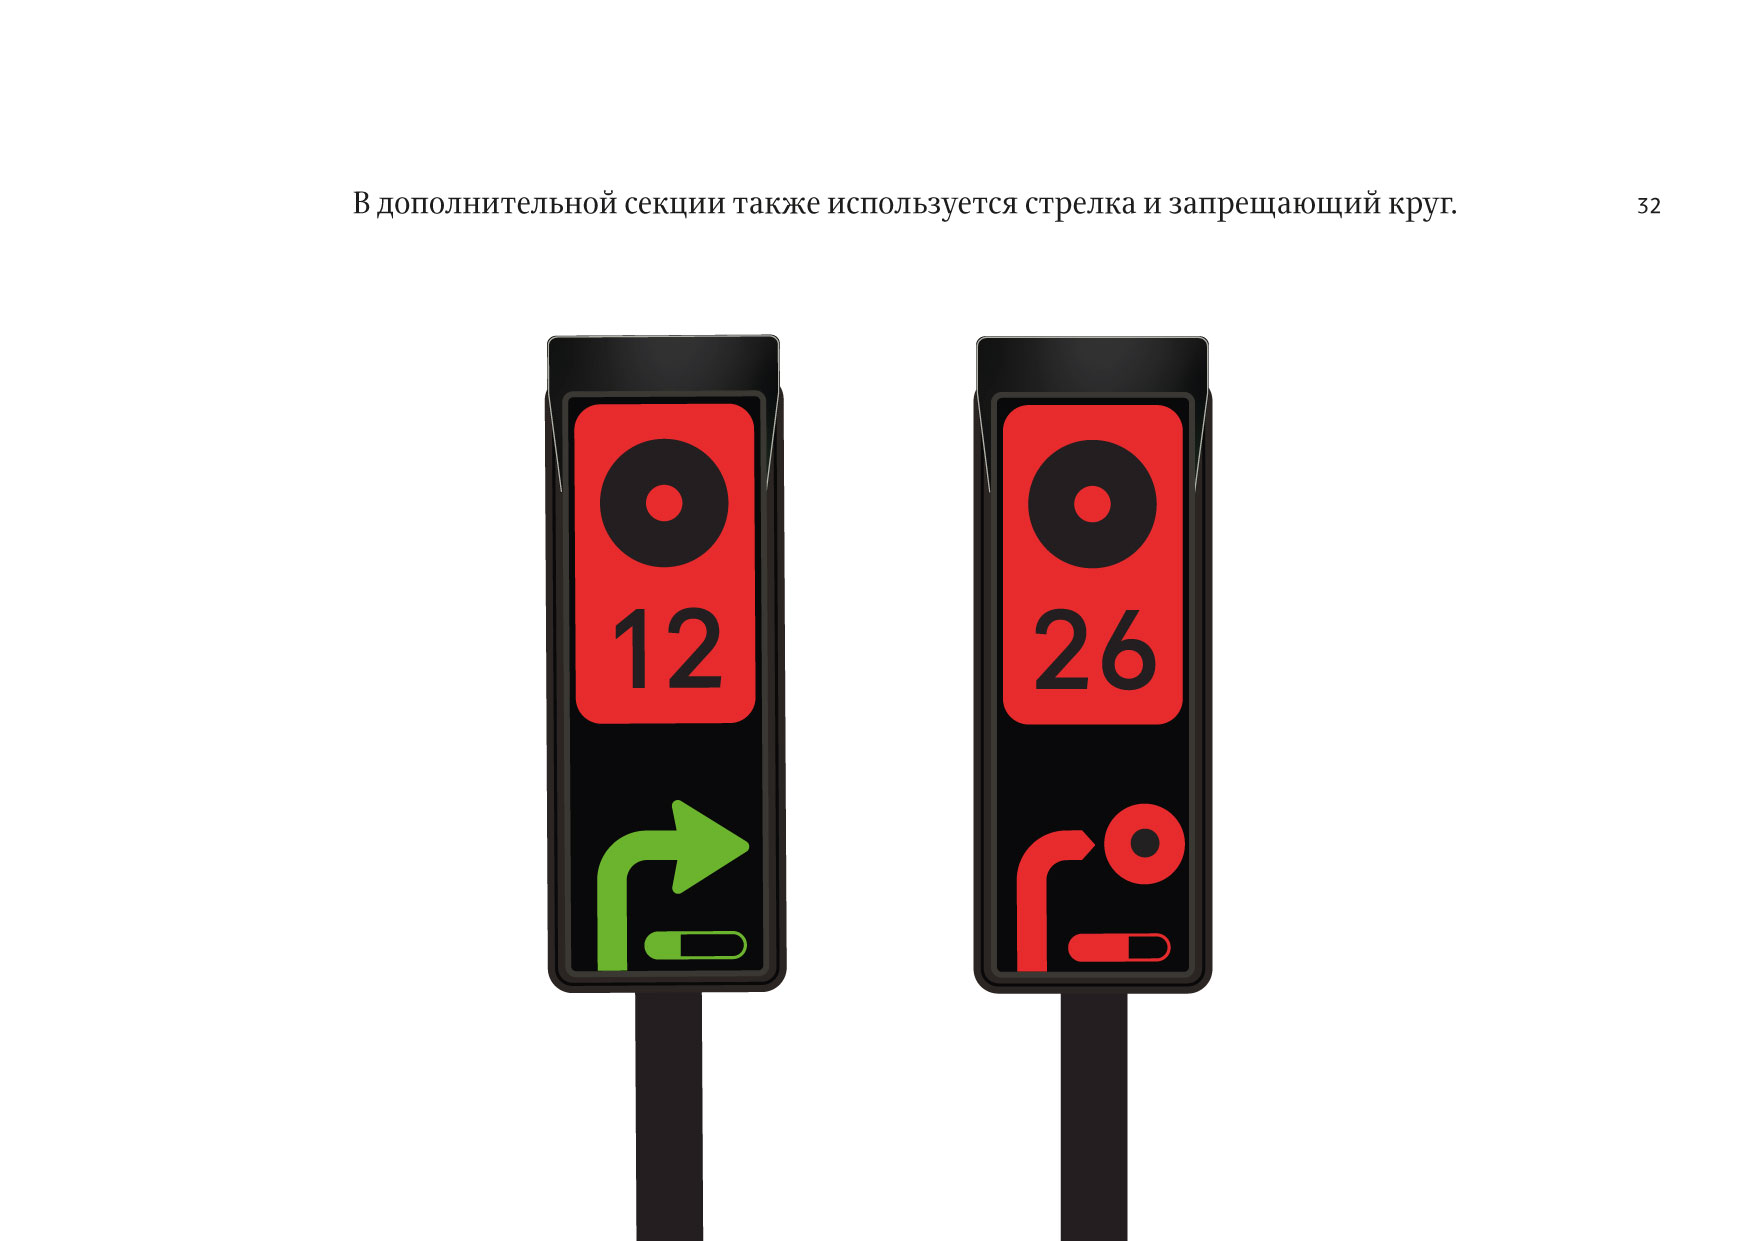 traffic light process 31